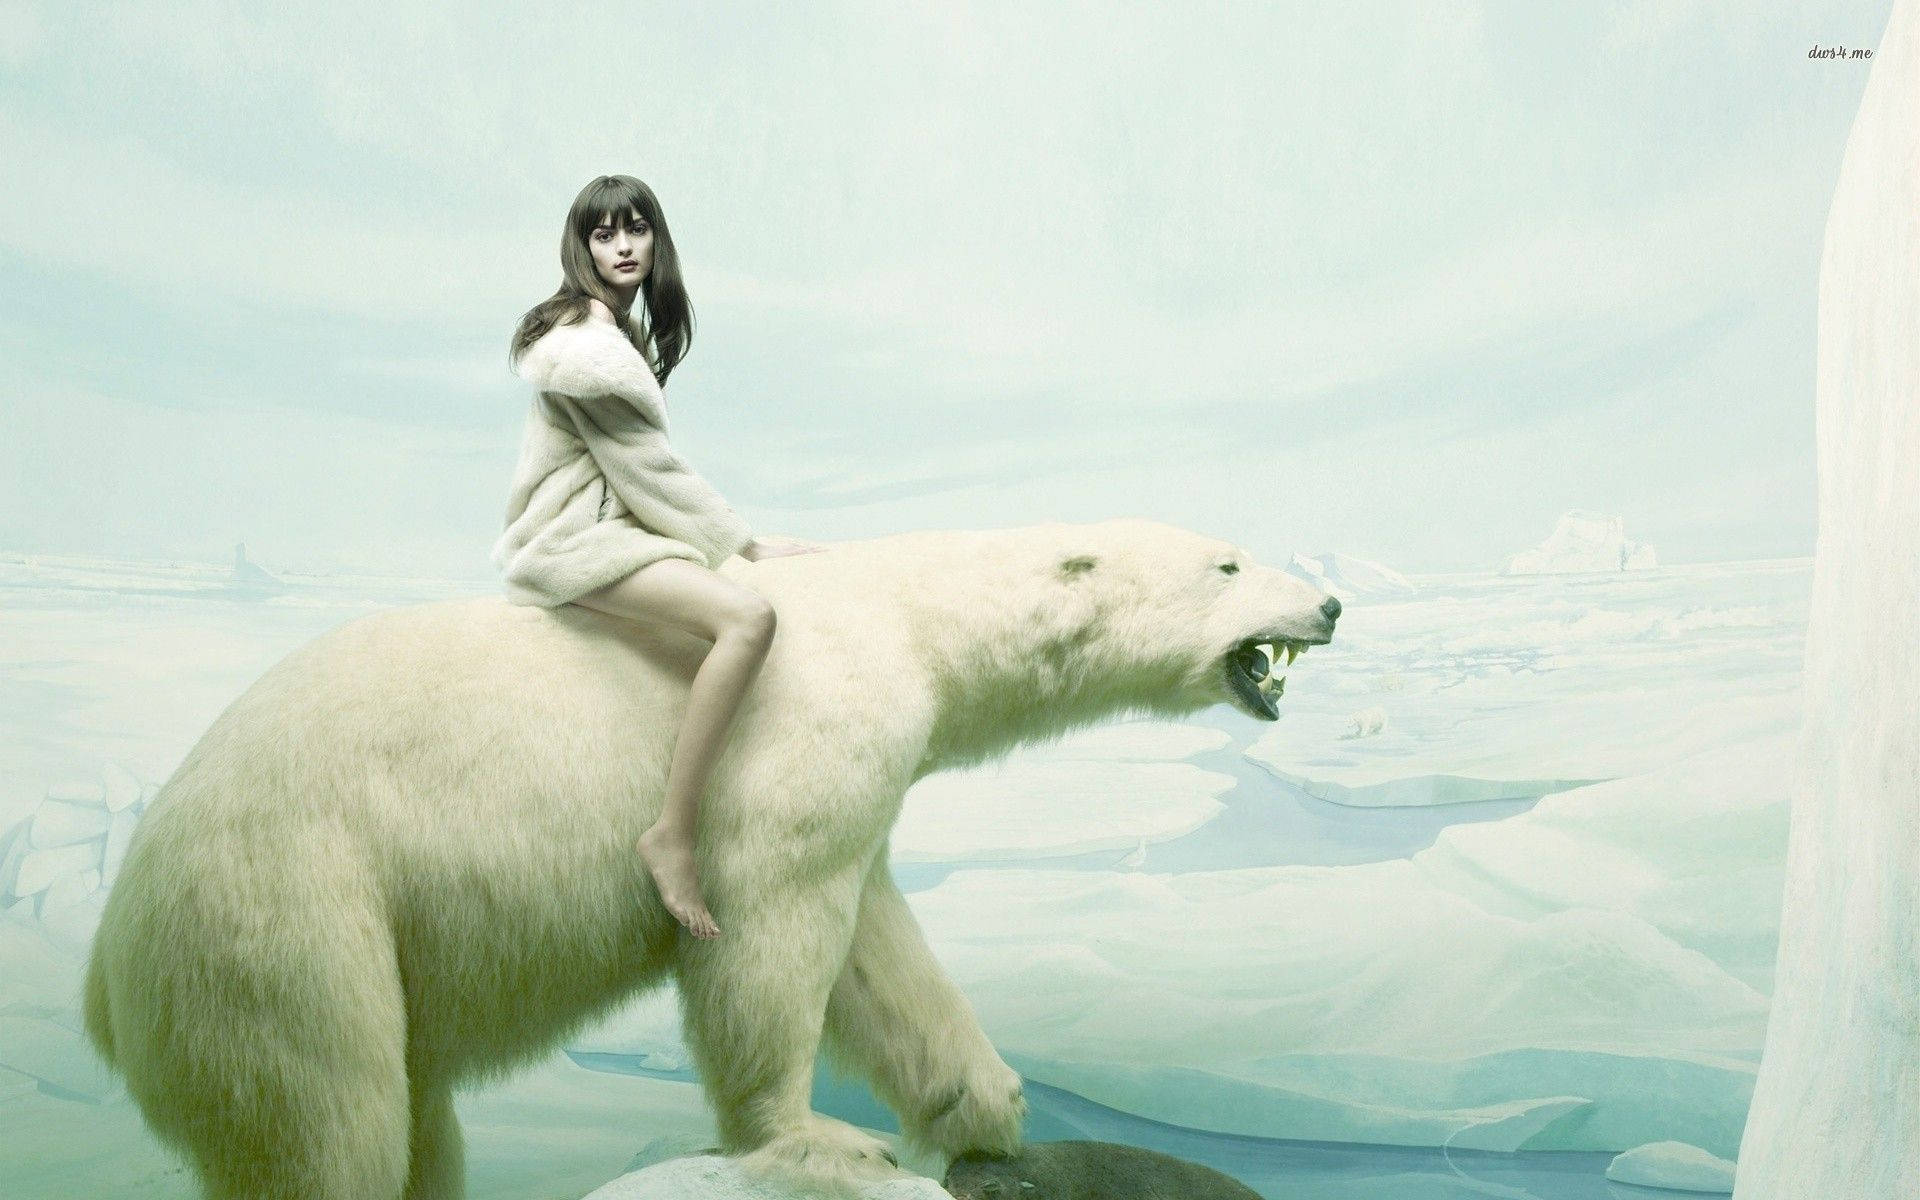 Woman Riding Polar Bear